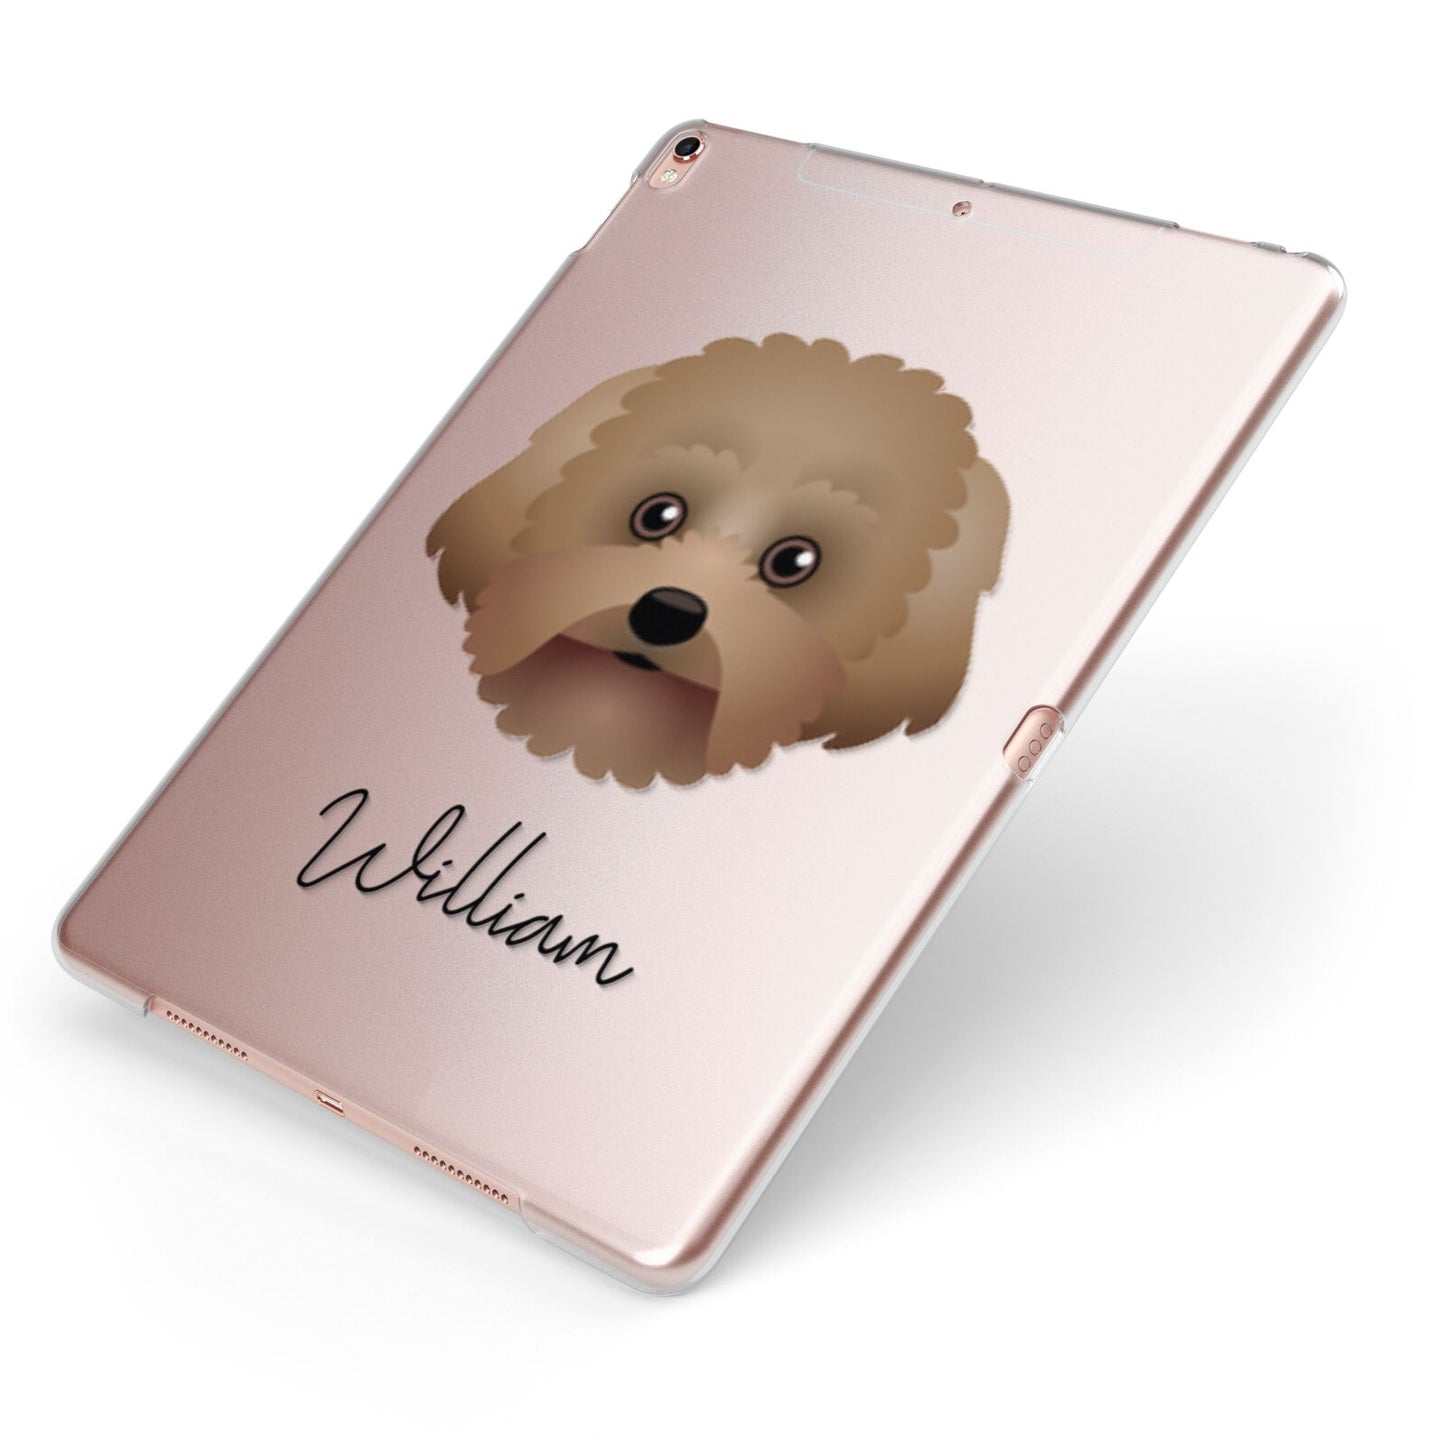 Malti Poo Personalised Apple iPad Case on Rose Gold iPad Side View